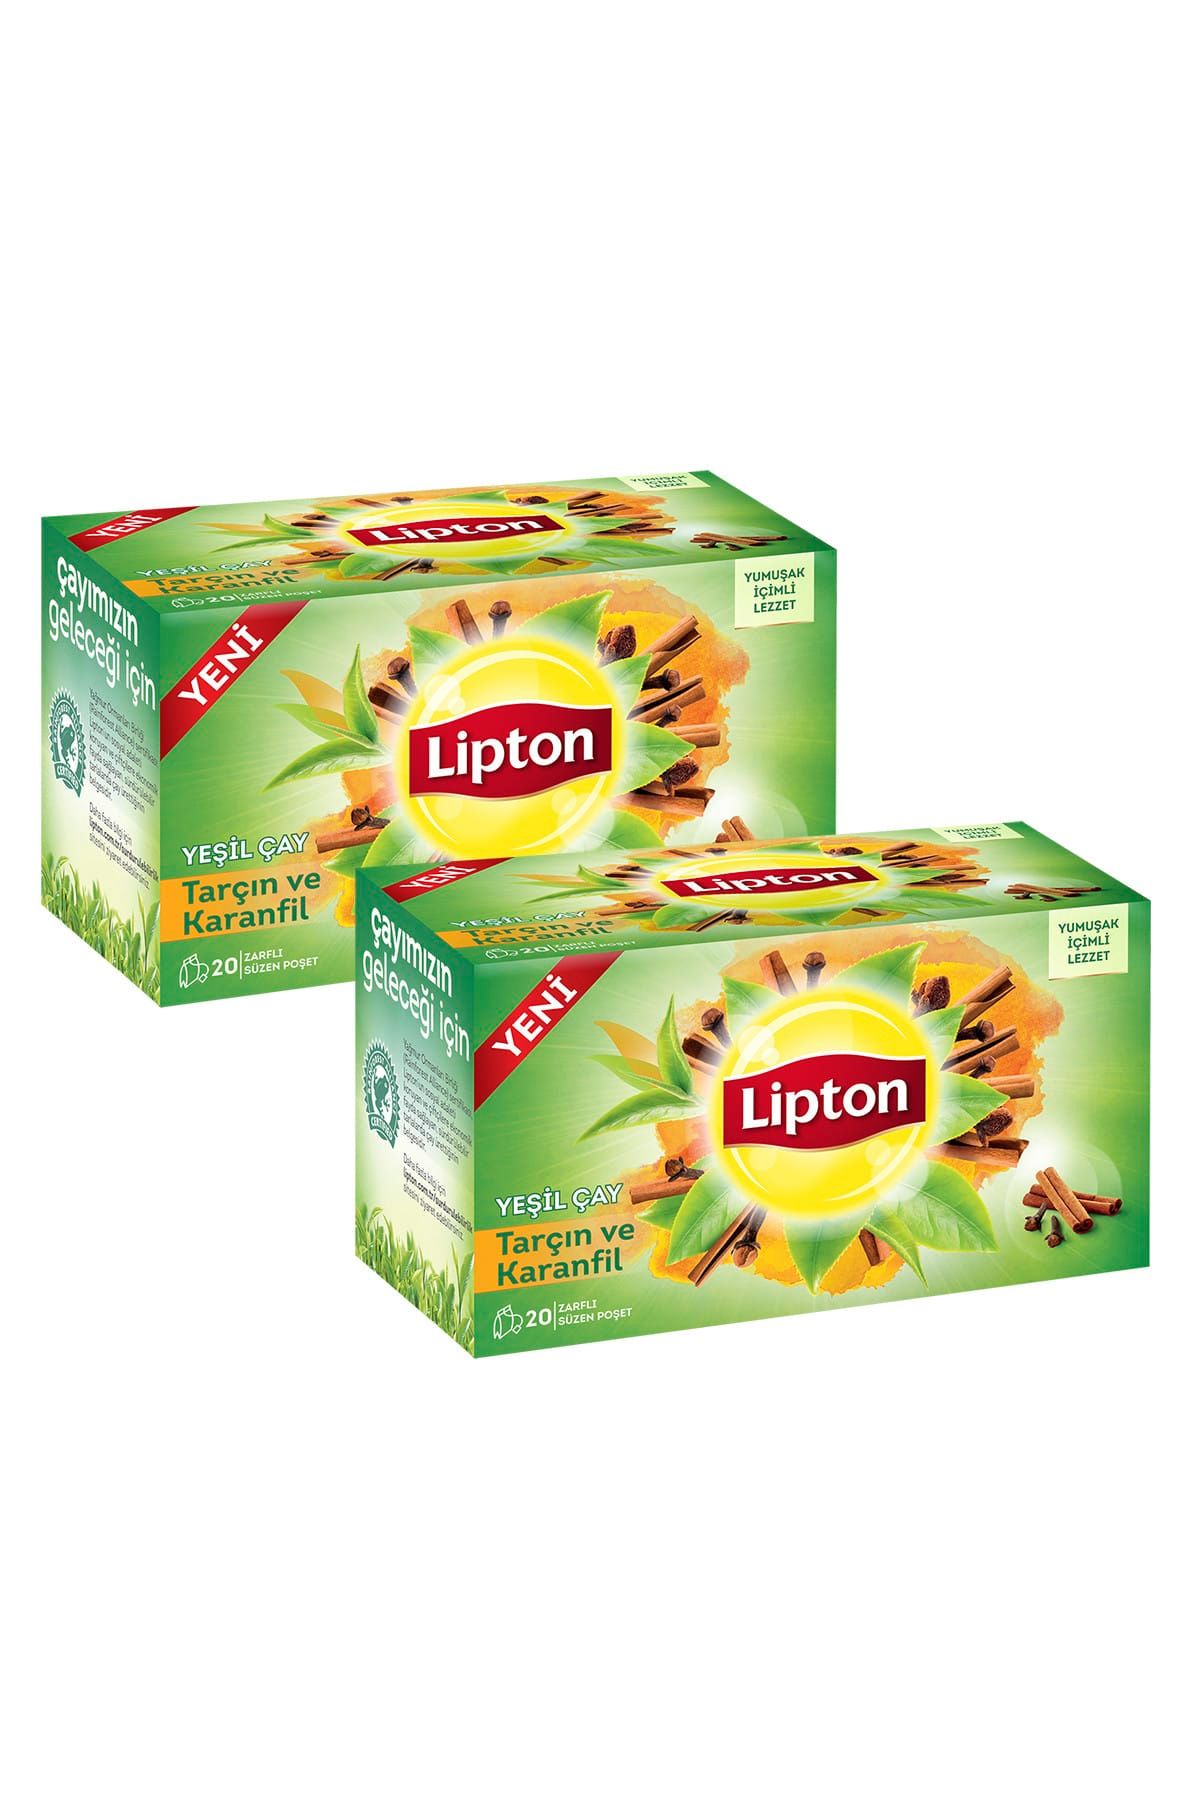 Lipton Bardak Poşet Çay  -Karanfil Tarçın Karışımlı Bitki Çayı 2'li Paket